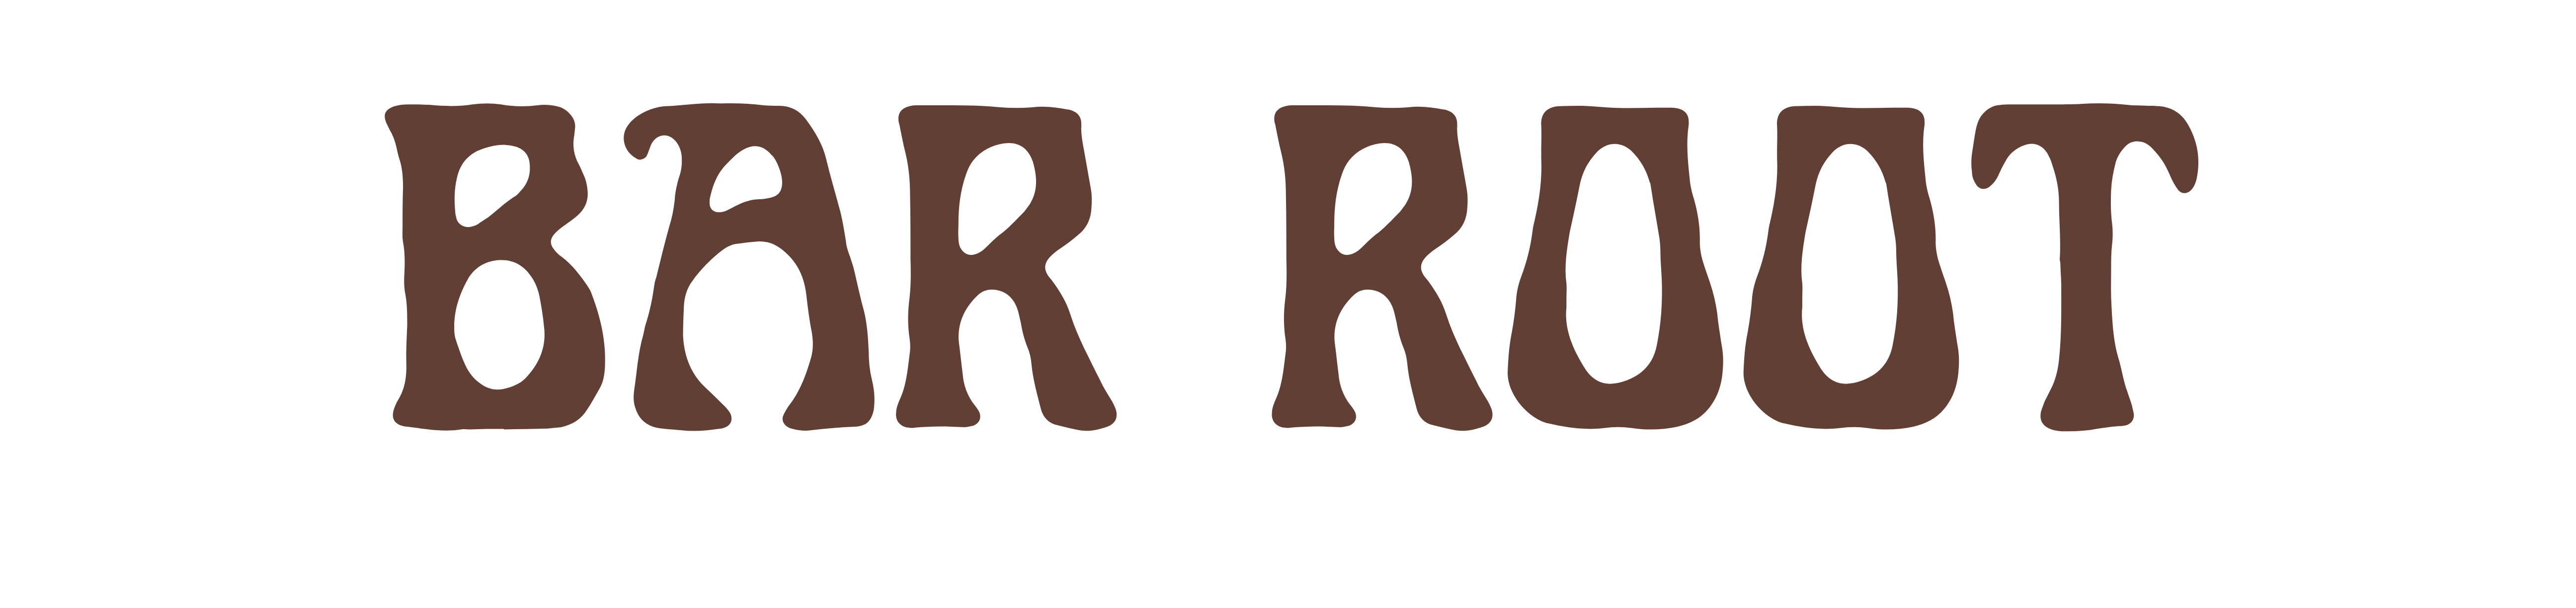 Bar Root 